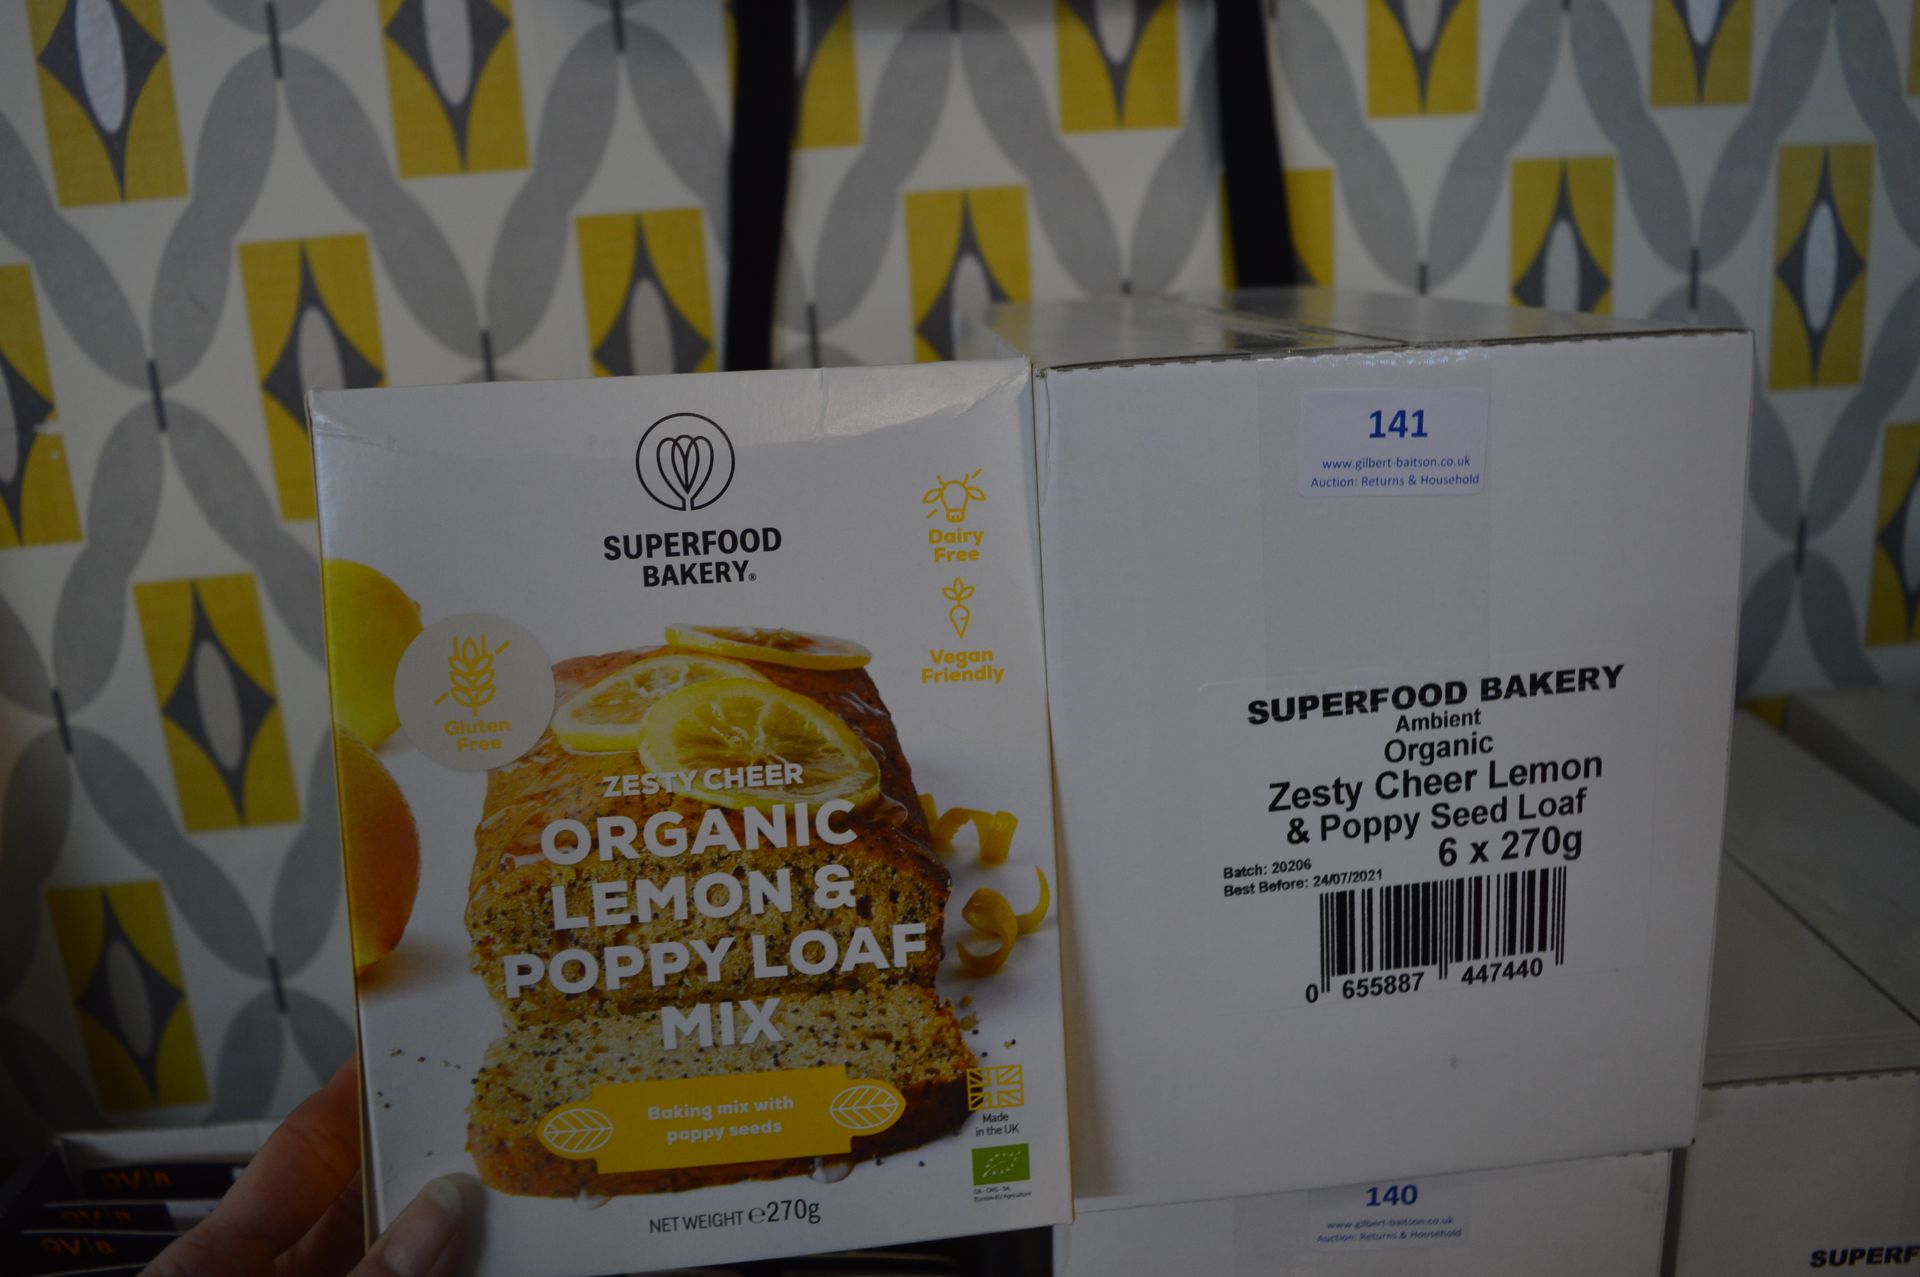 6x Organic Lemon & Poppy Loaf Mix